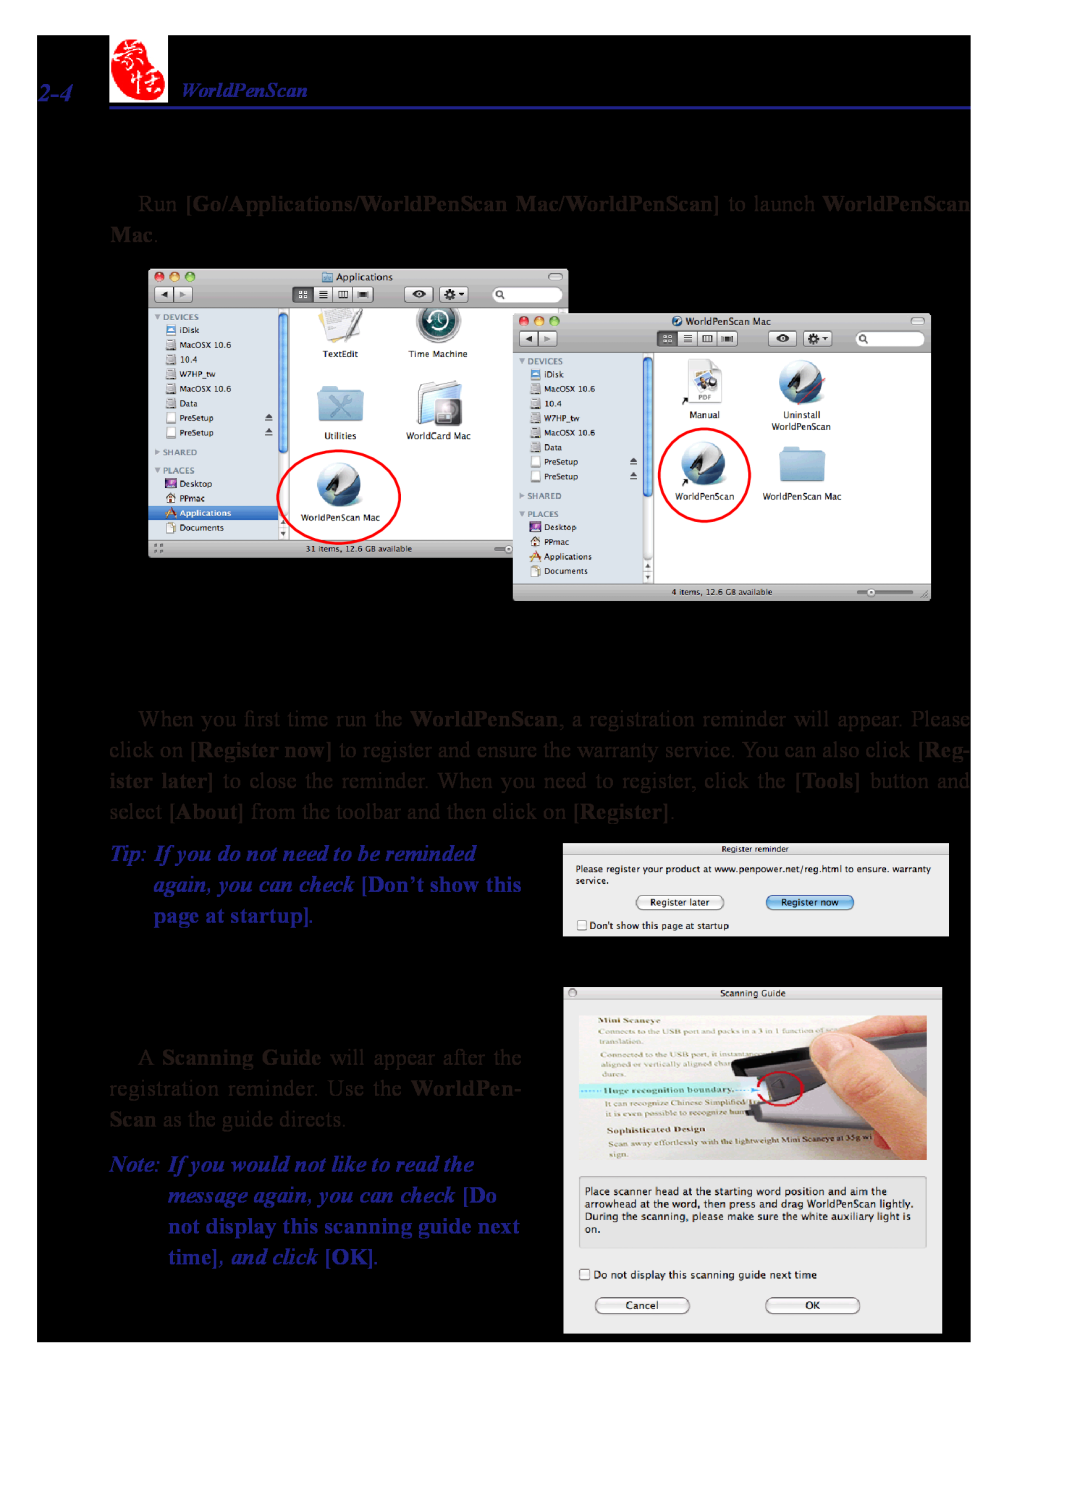 Penpower WorldPenScan Pro user manual Launching WorldPenScan Mac, Registeration, Scanning Guide 